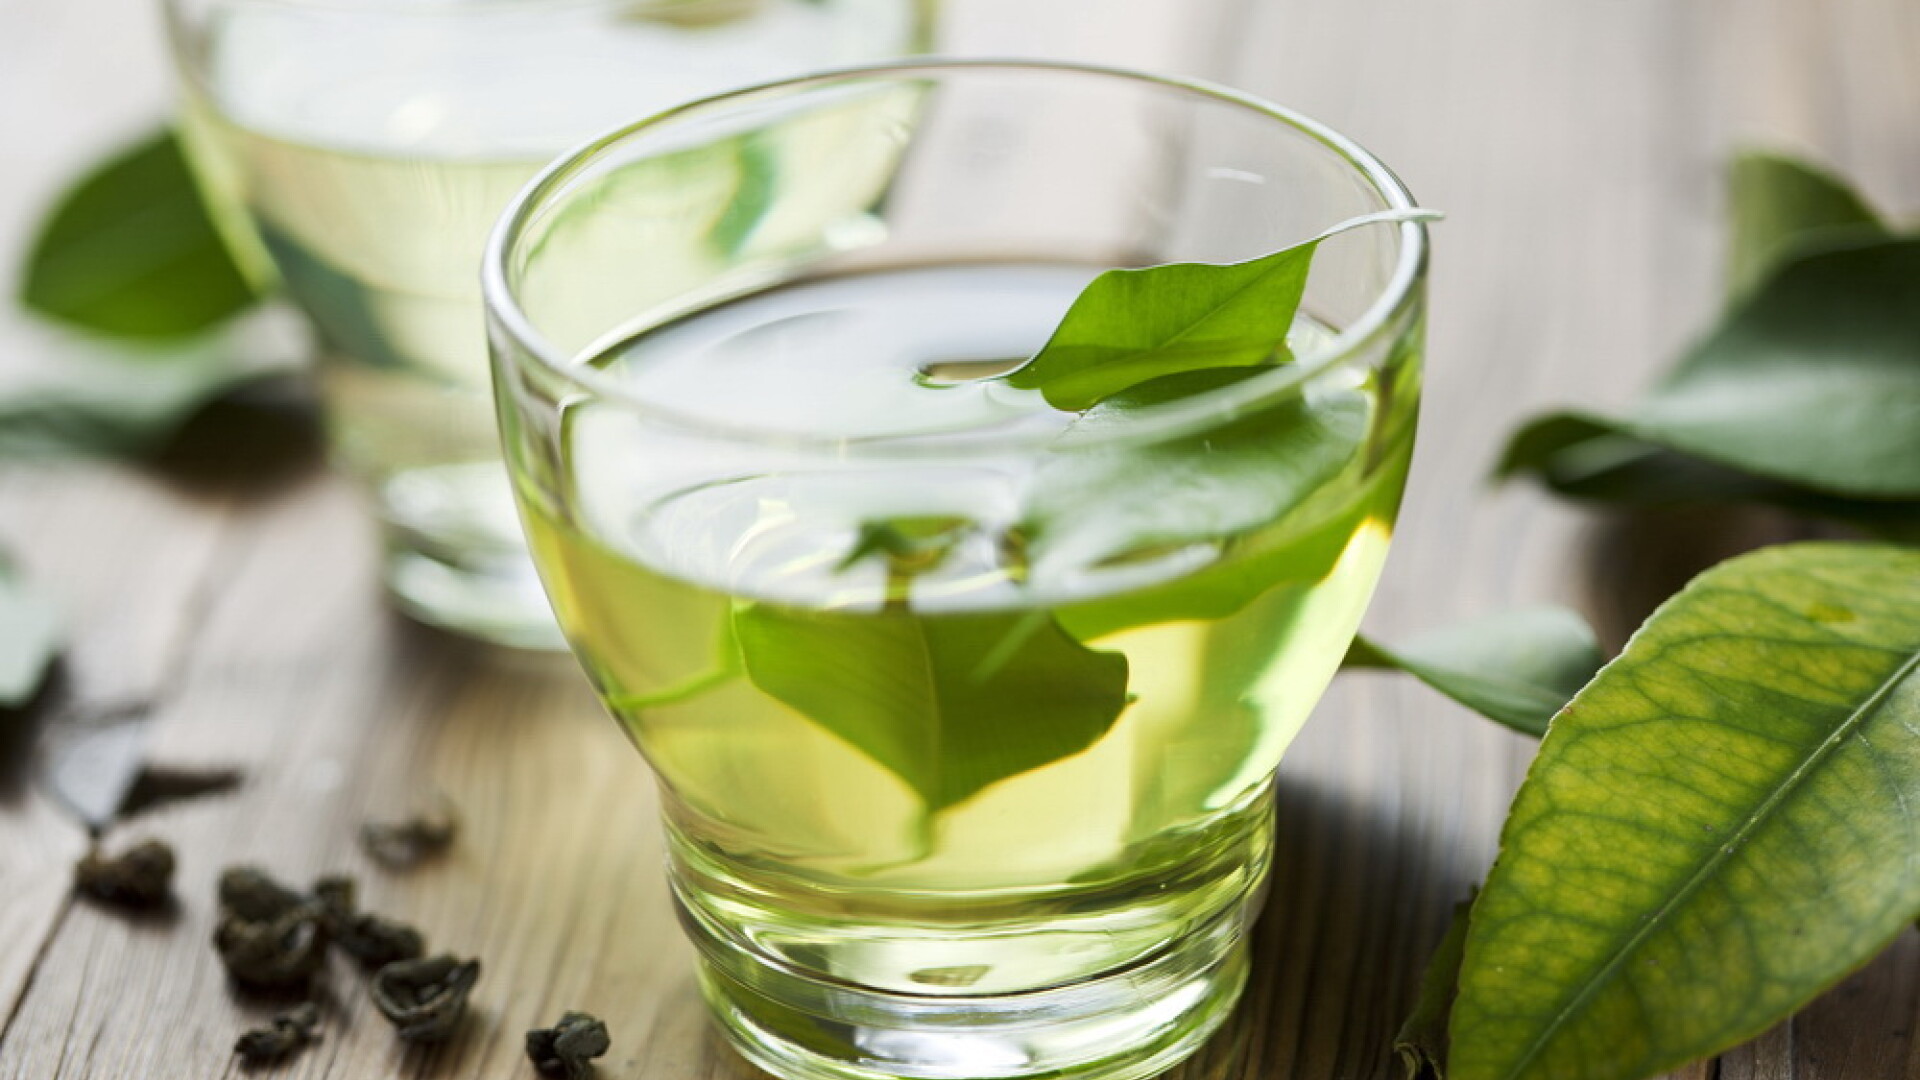 ceai verde - Shutterstock